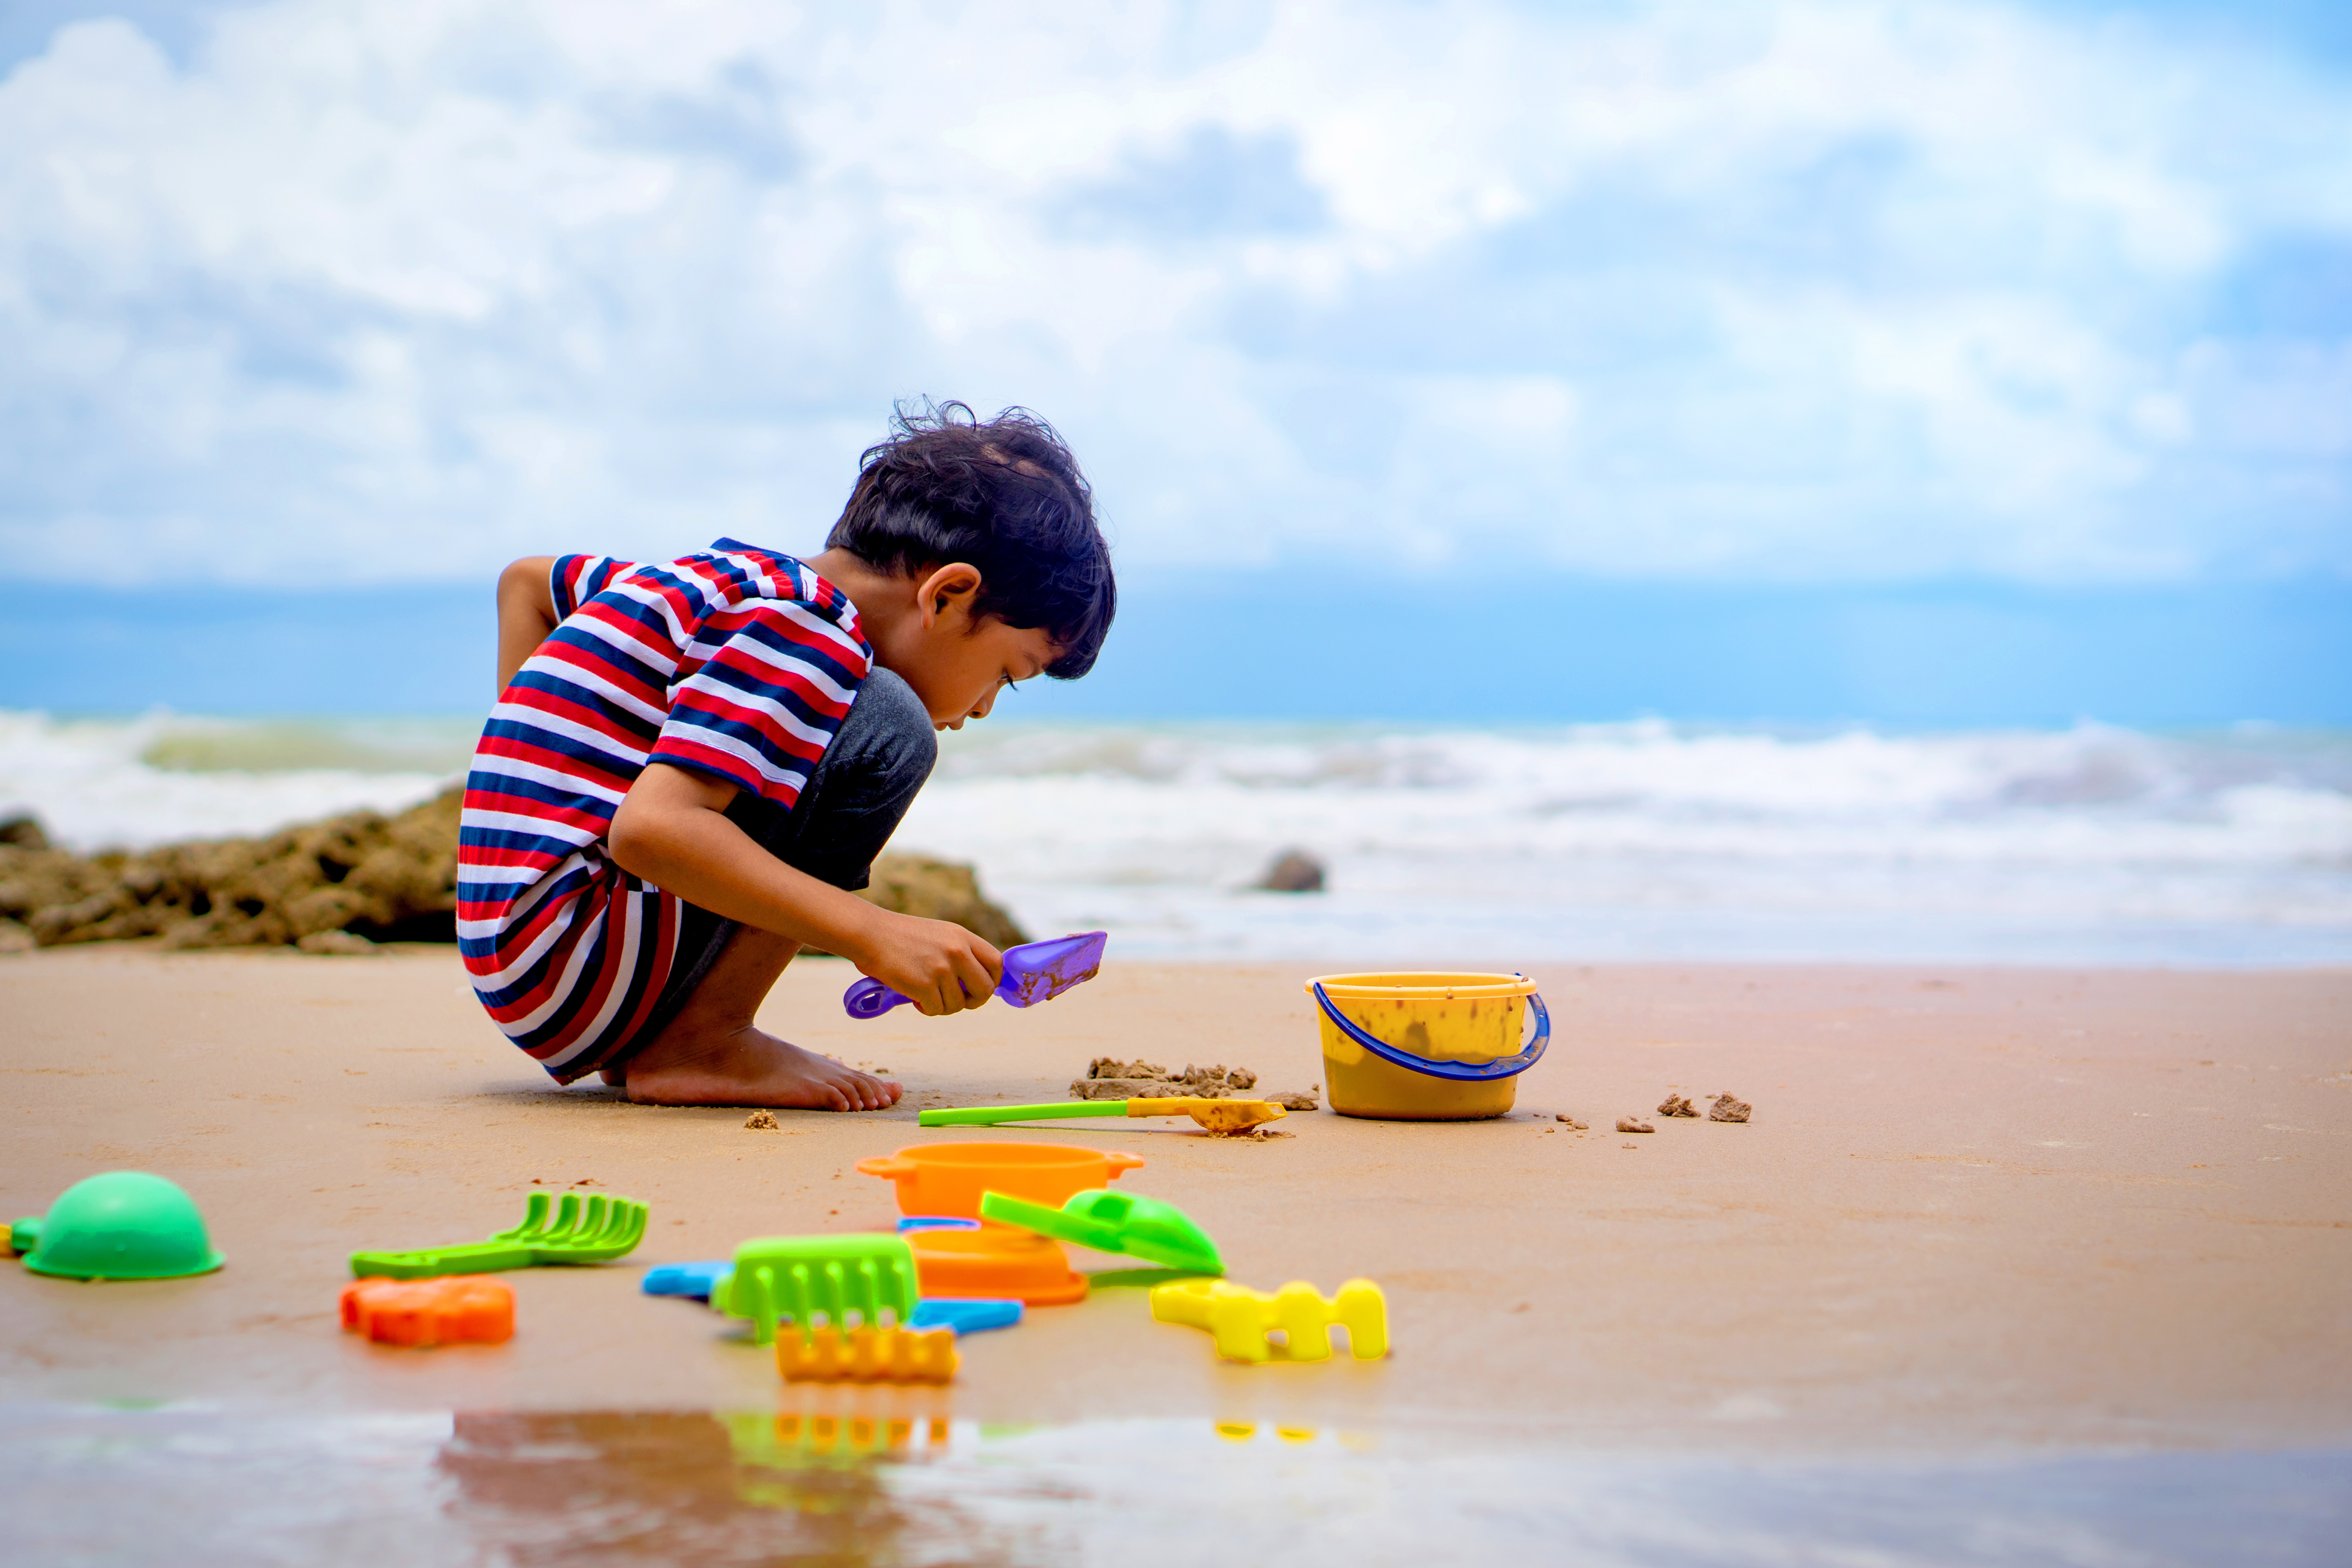 A boy plays on the beach with the ocean behind him